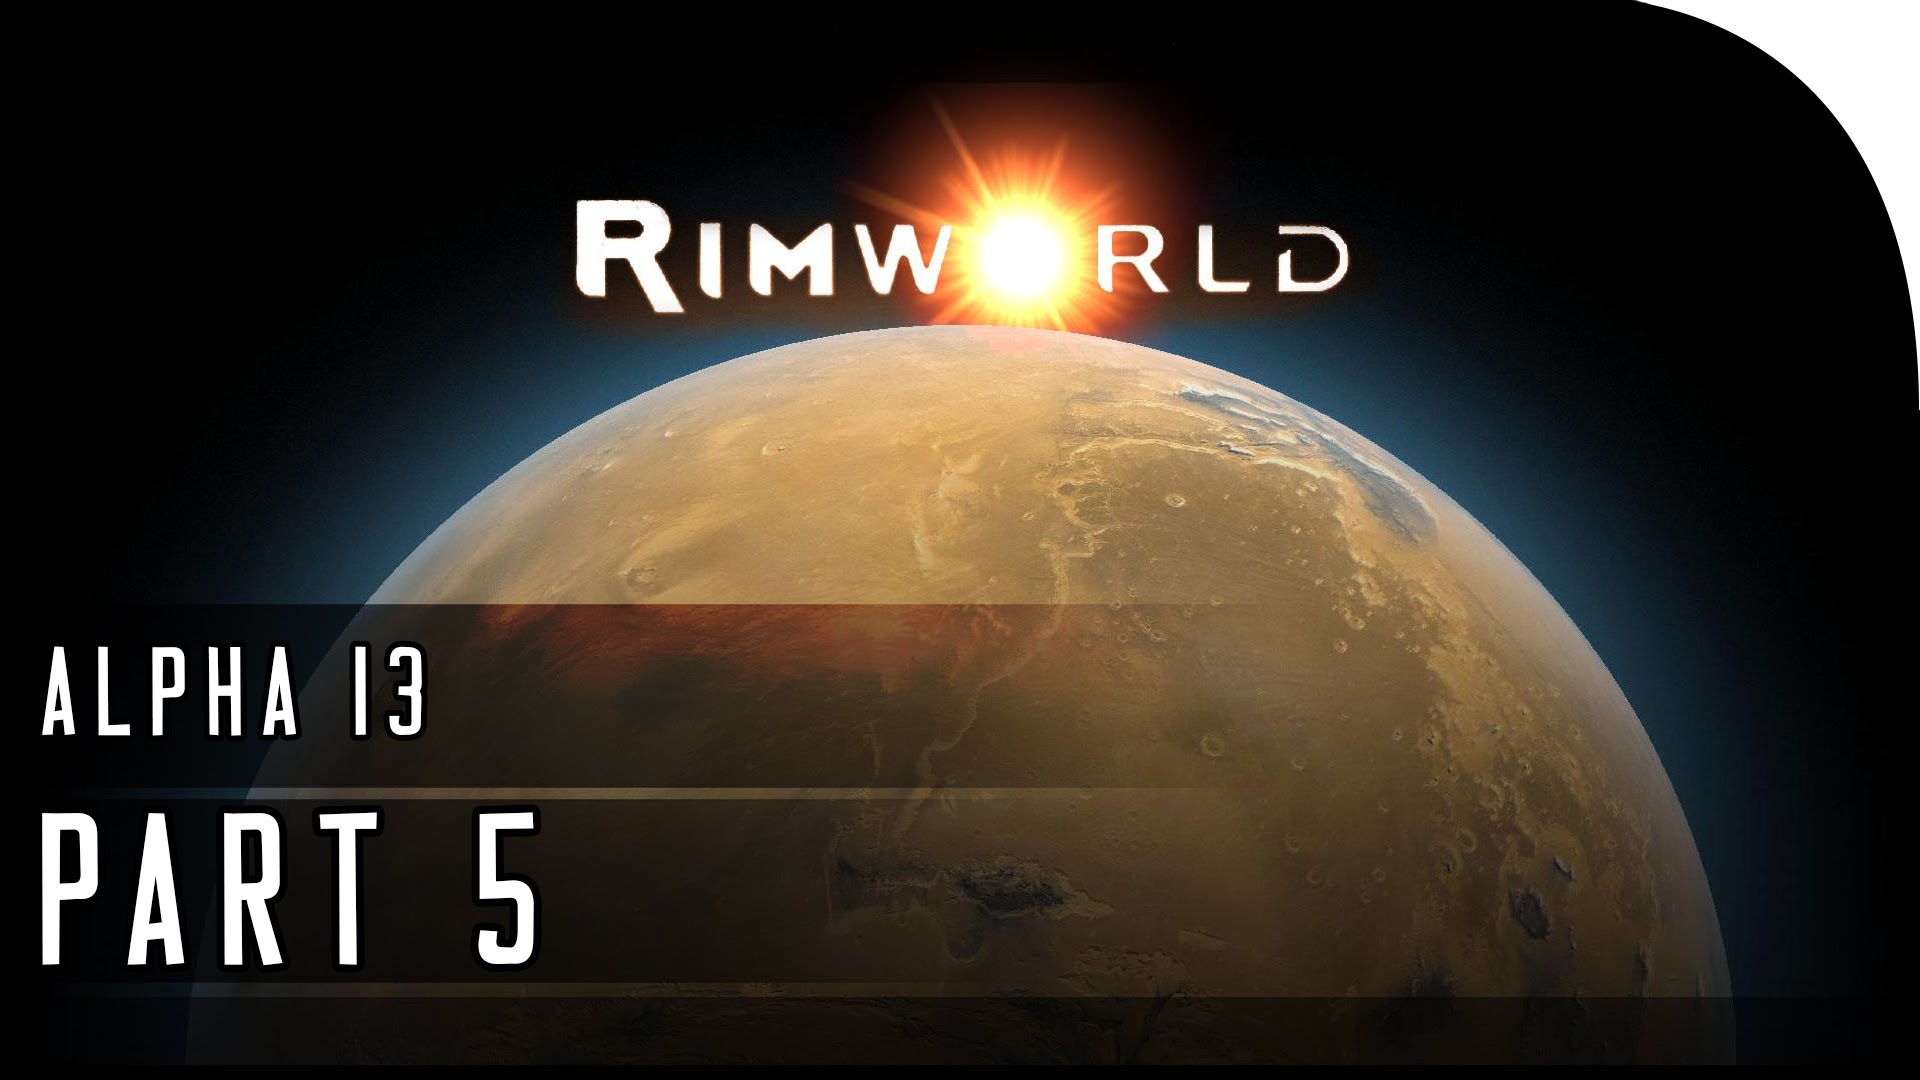 RimWorld Alpha 13 Part 5 – “RAIDER ATTACK!!” (Let’s Play)